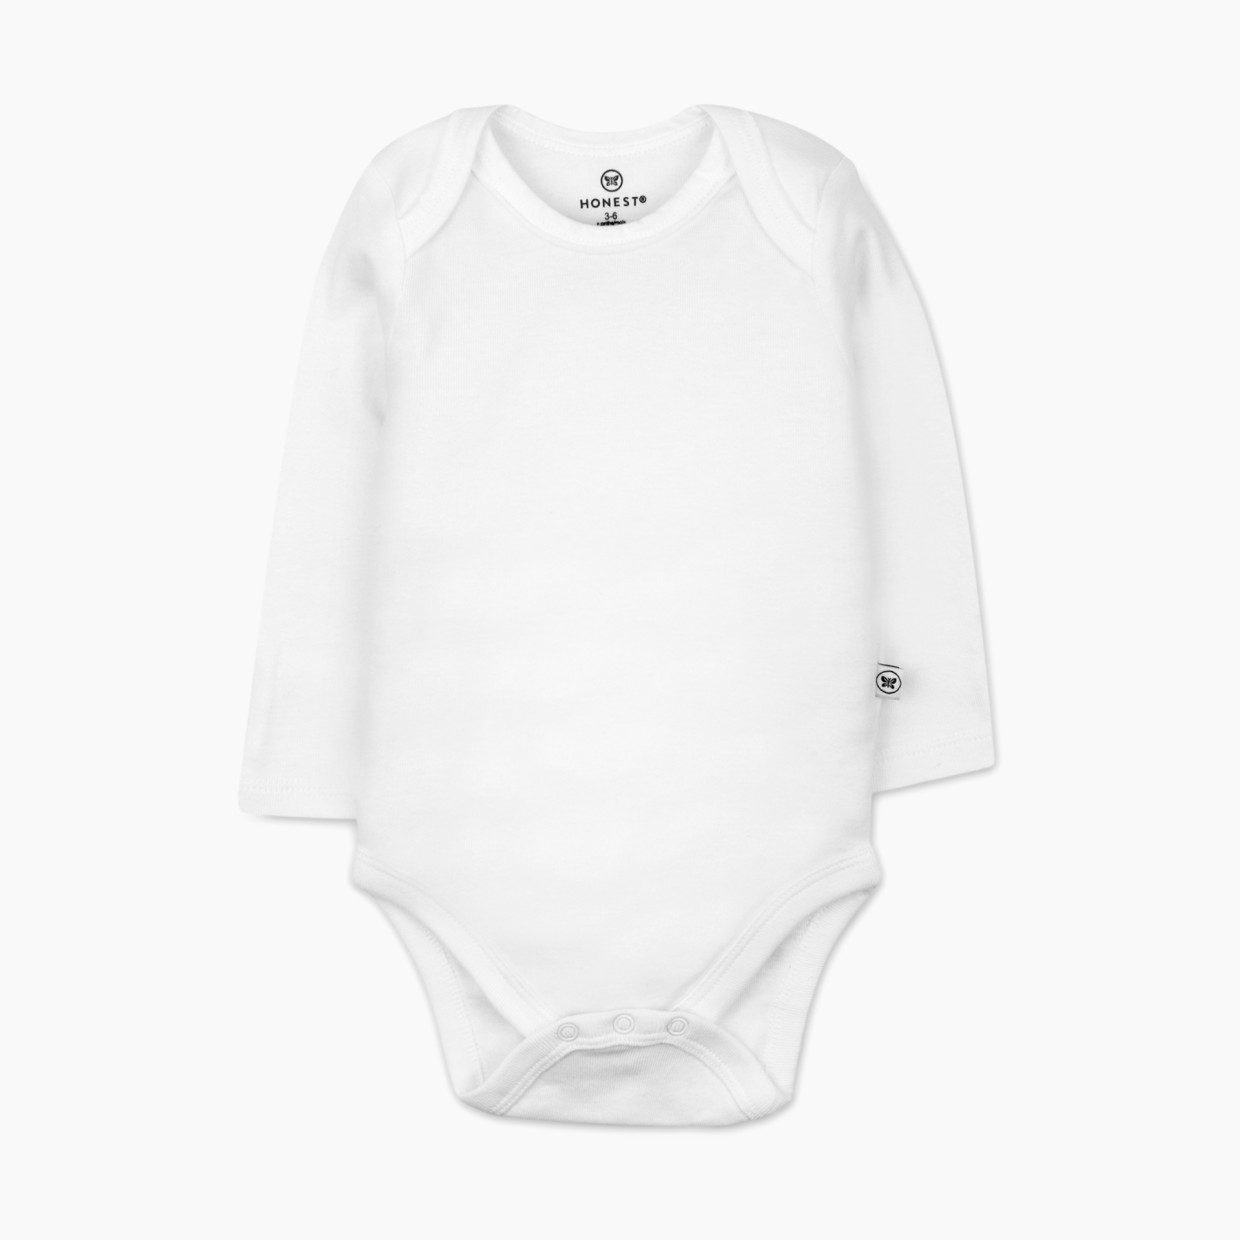 Honest Baby Clothing 10-Pack Organic Cotton Long Sleeve Bodysuits - Bright White, Nb, 10.